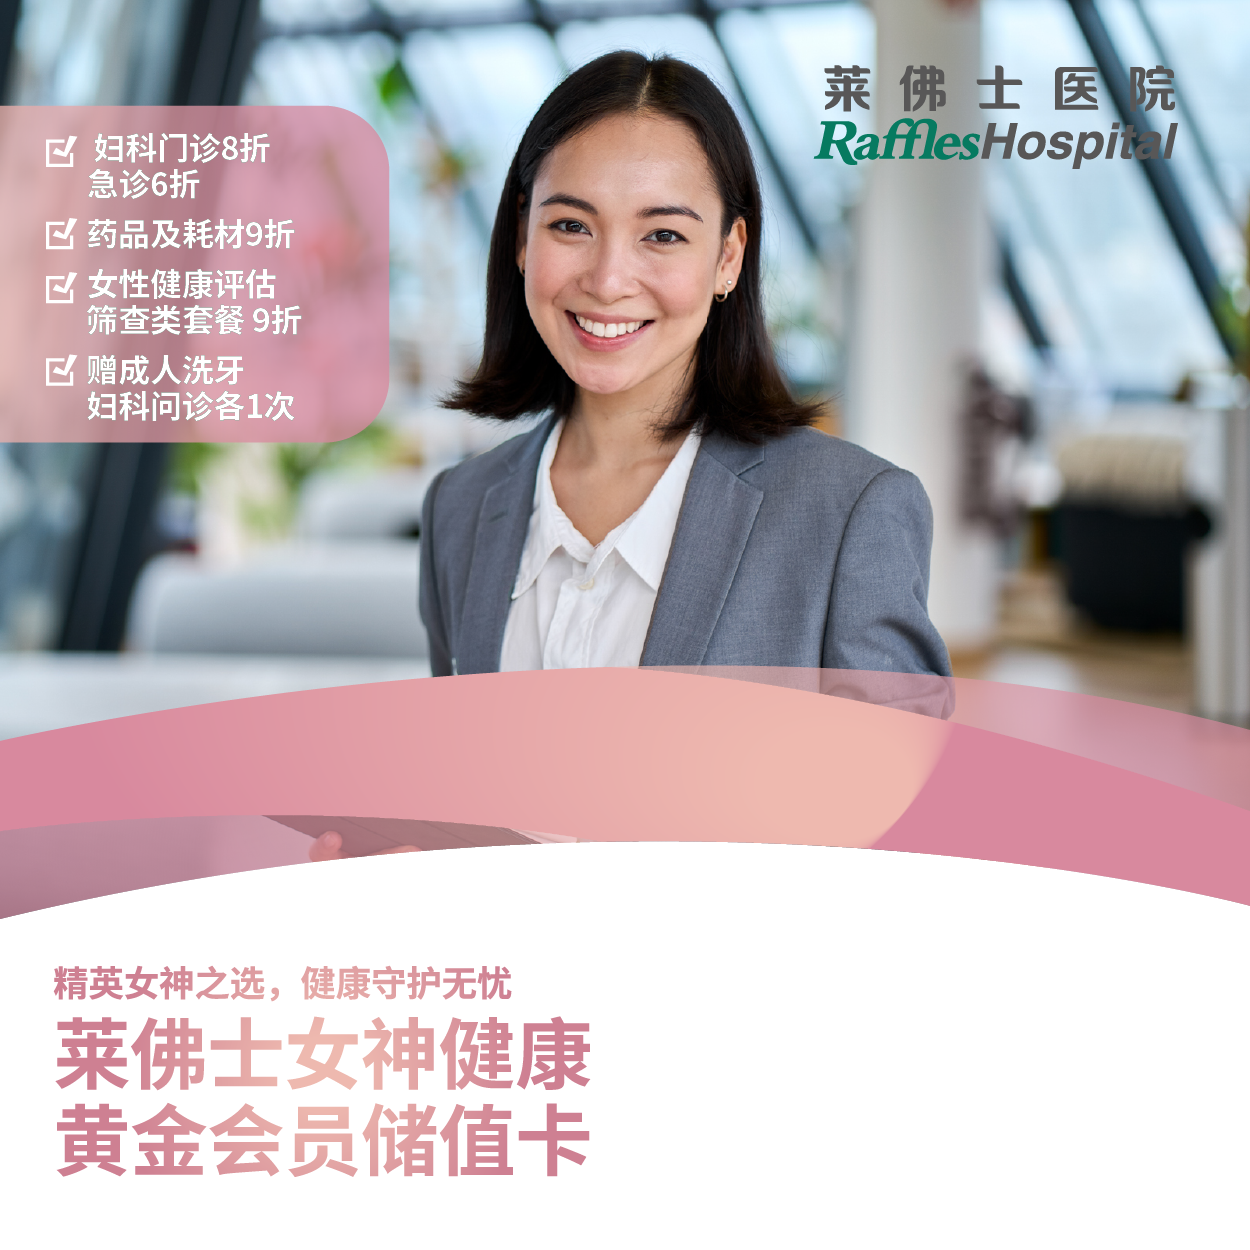 Raffles Hospital Beijing - Member Services - Raffles Lady Gold membership